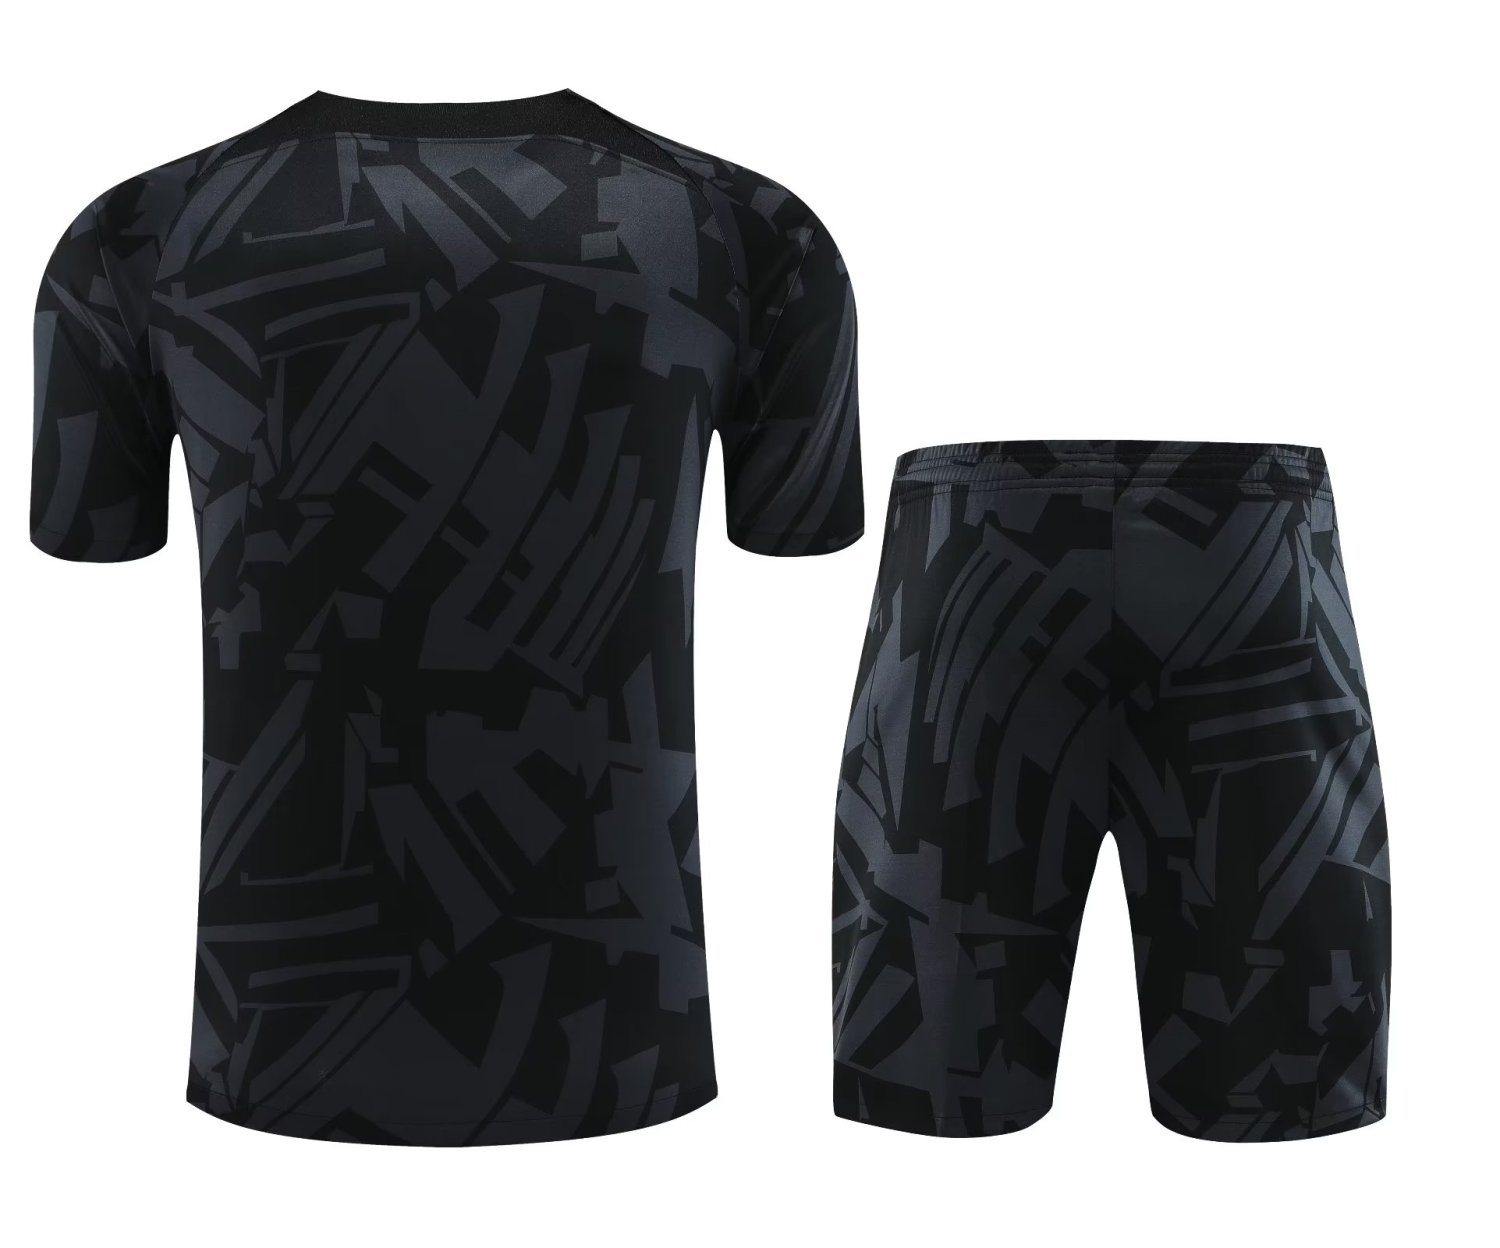 Men's PSG x Jordan Black Training Jersey + Short Set 23/24